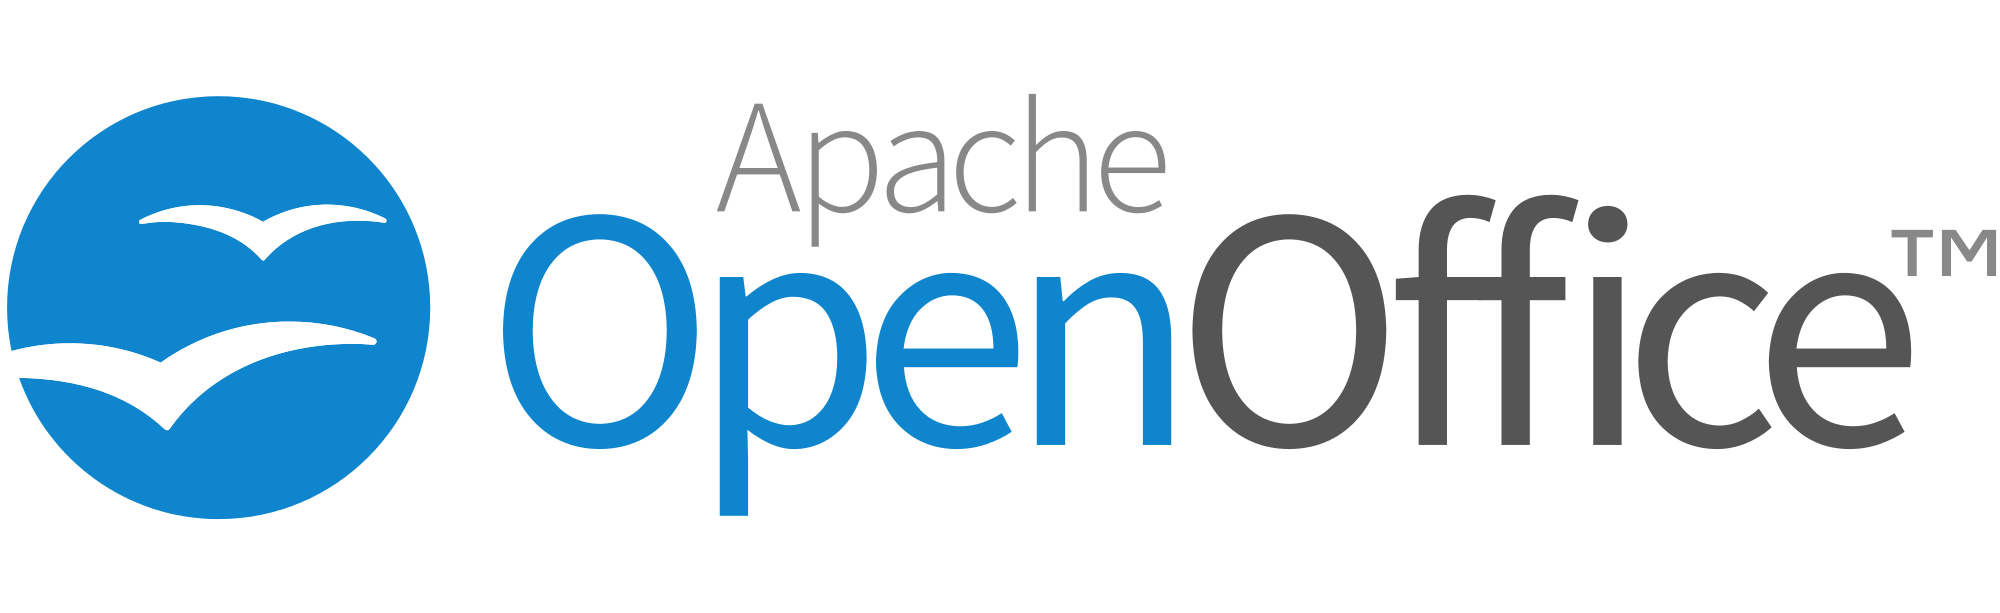 Apache_OpenOffice_logo_and_wordmark_(2014).svg